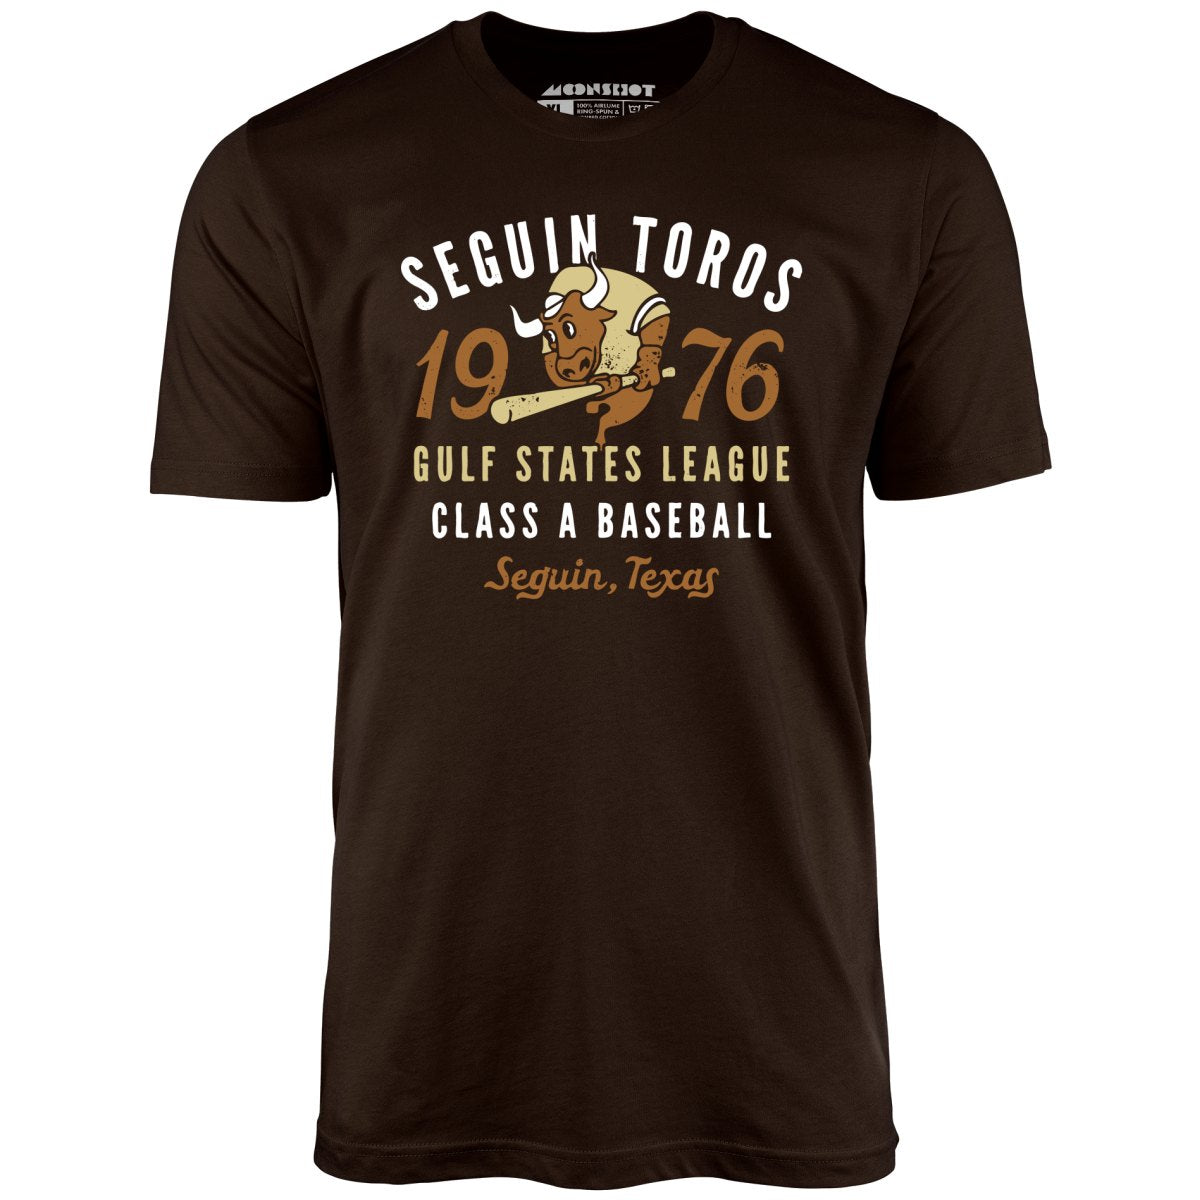 Seguin Toros - Texas - Vintage Defunct Baseball Teams - Unisex T-Shirt